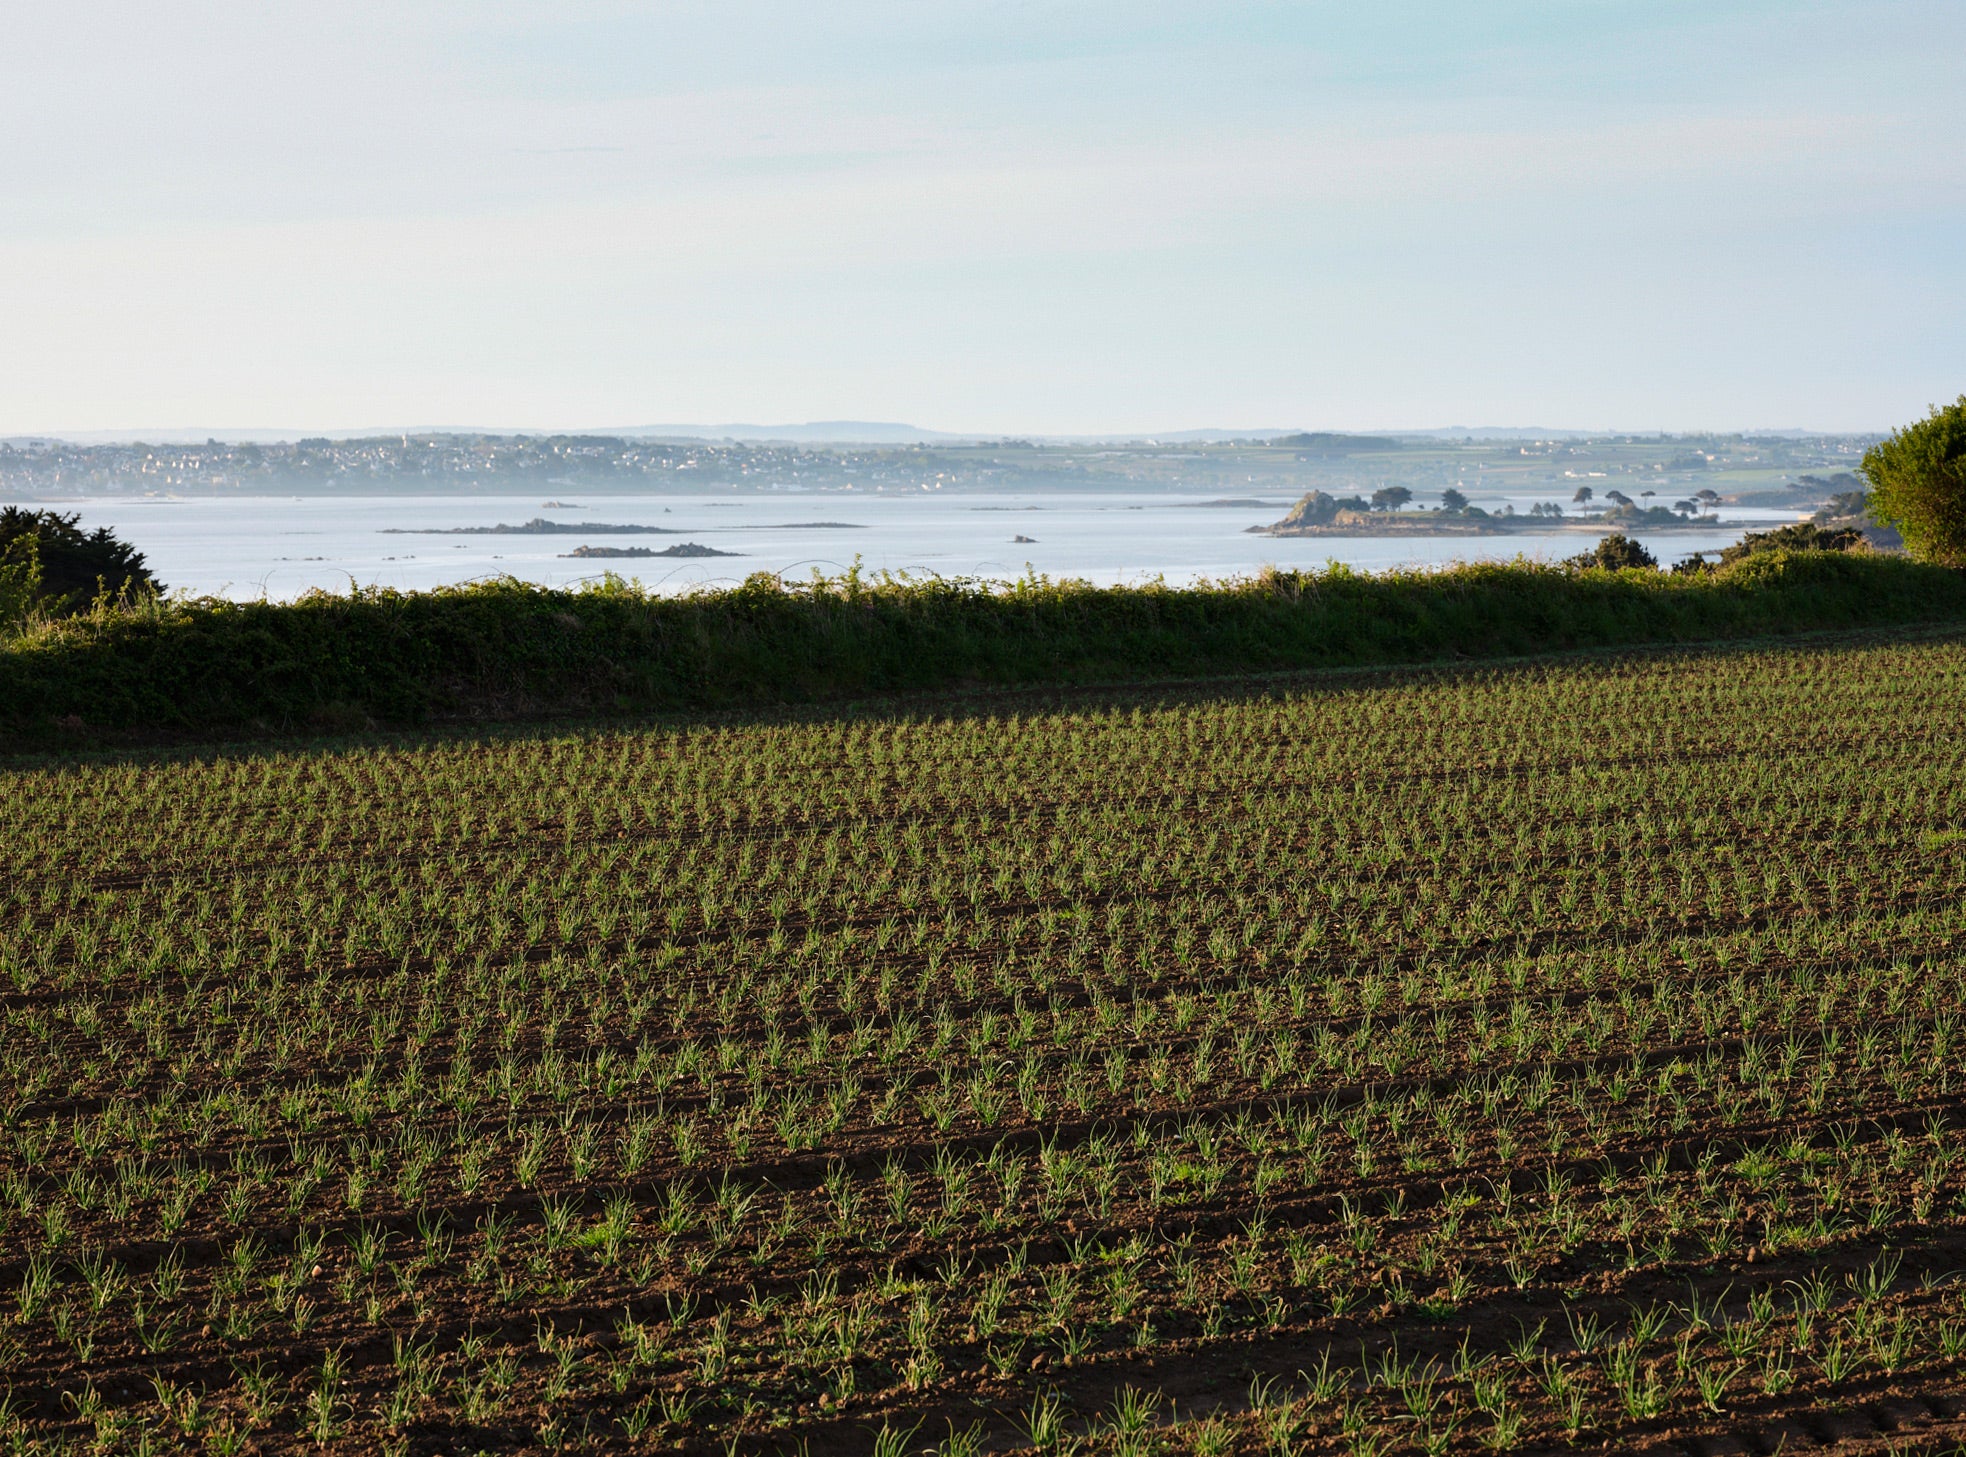 Onion field in front of the sea in Roscoff